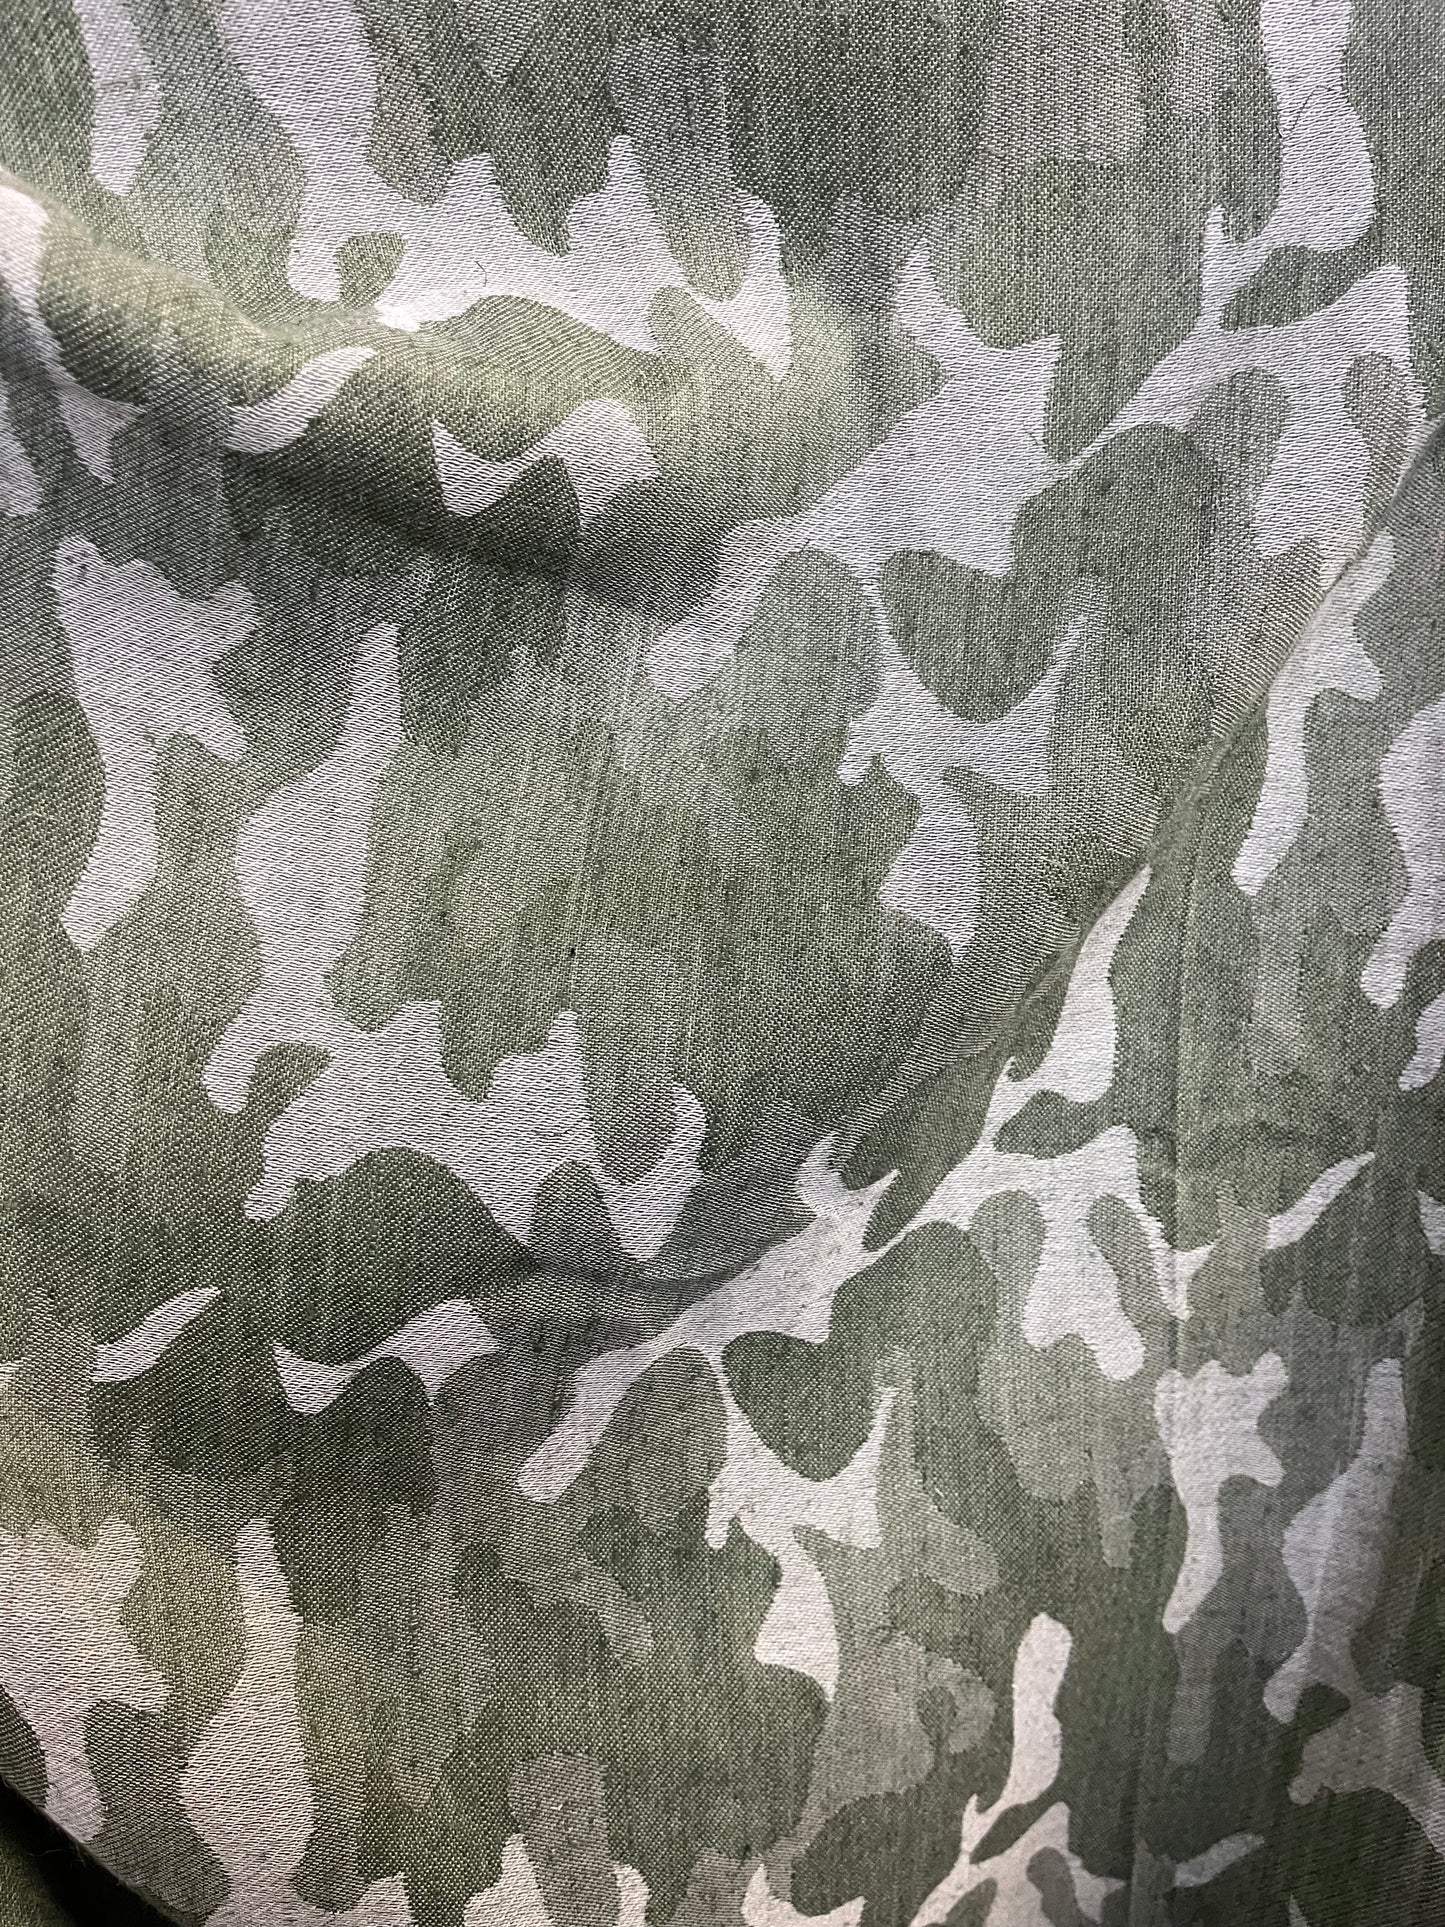 Italian Cotton/Linen Camouflage Jacquard - Pistachio Green